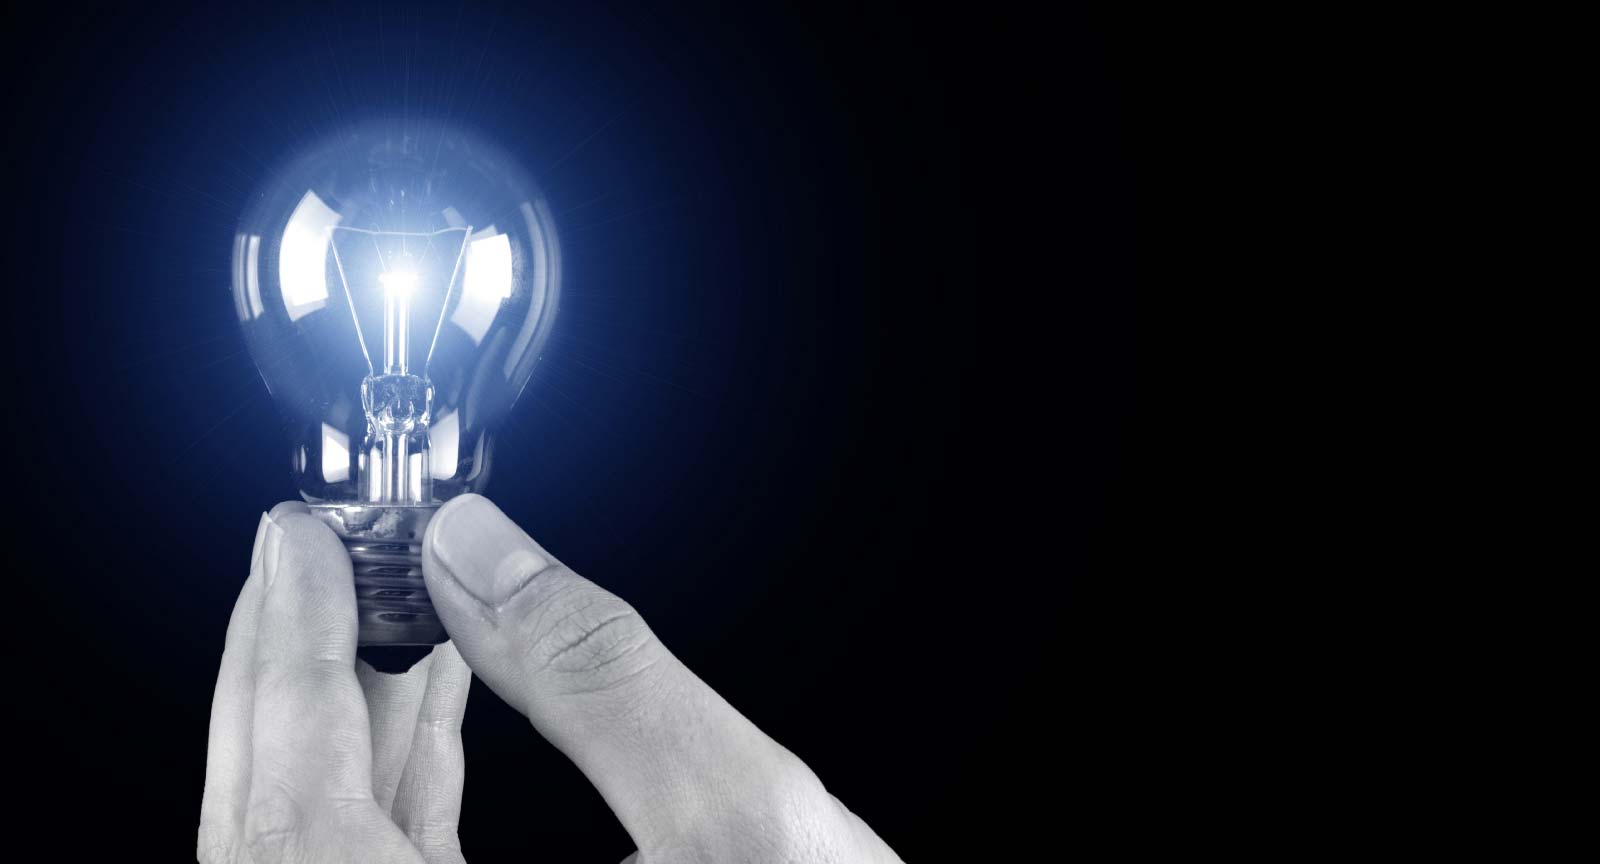 Safest Light Bulbs for Your Home: Are LED Lights Safe? Blue Light and Health Risk?